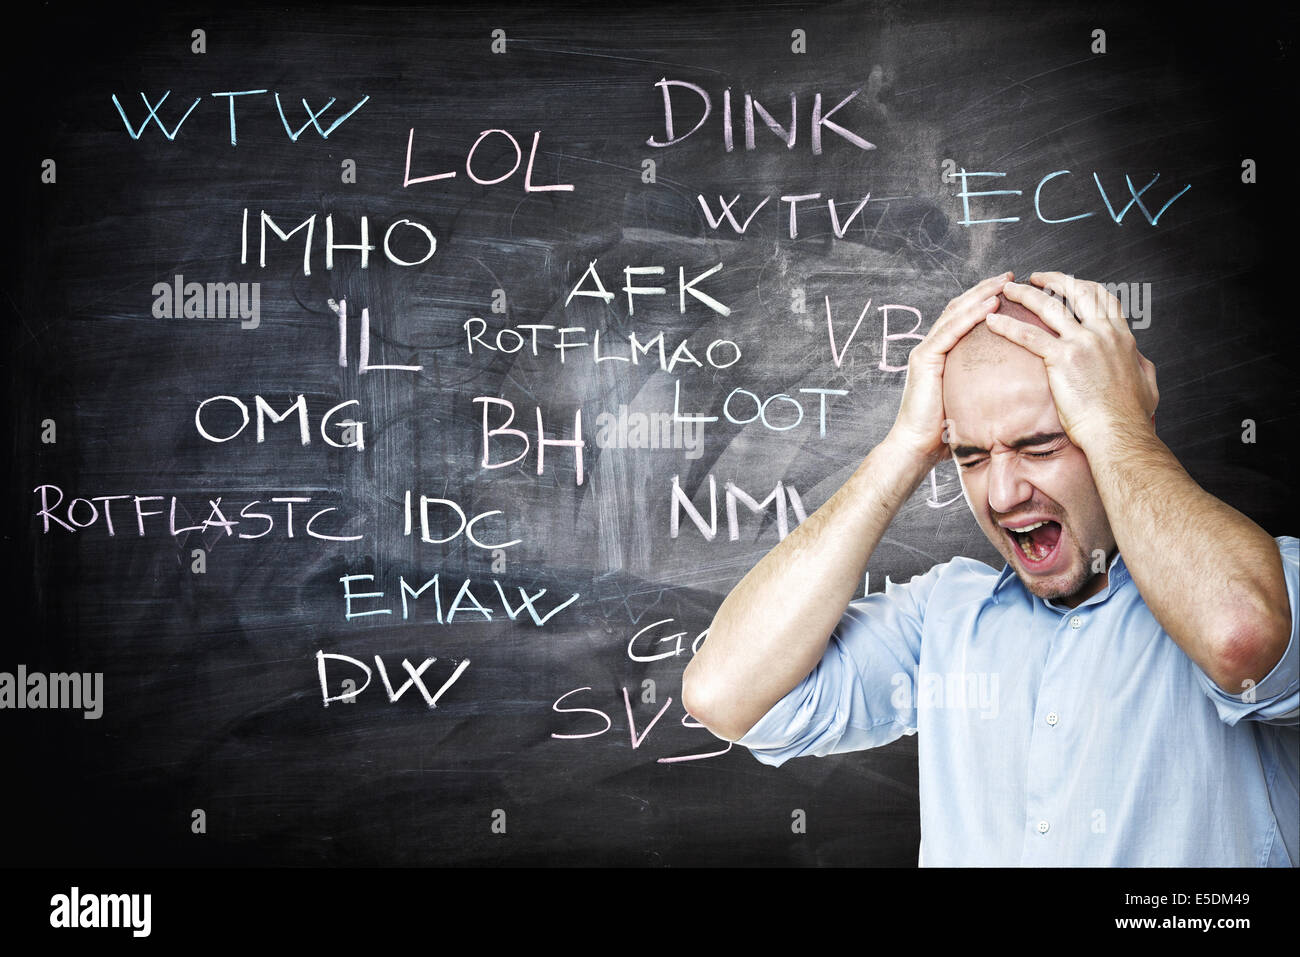 stressed man and internet slang on blackboard Stock Photo